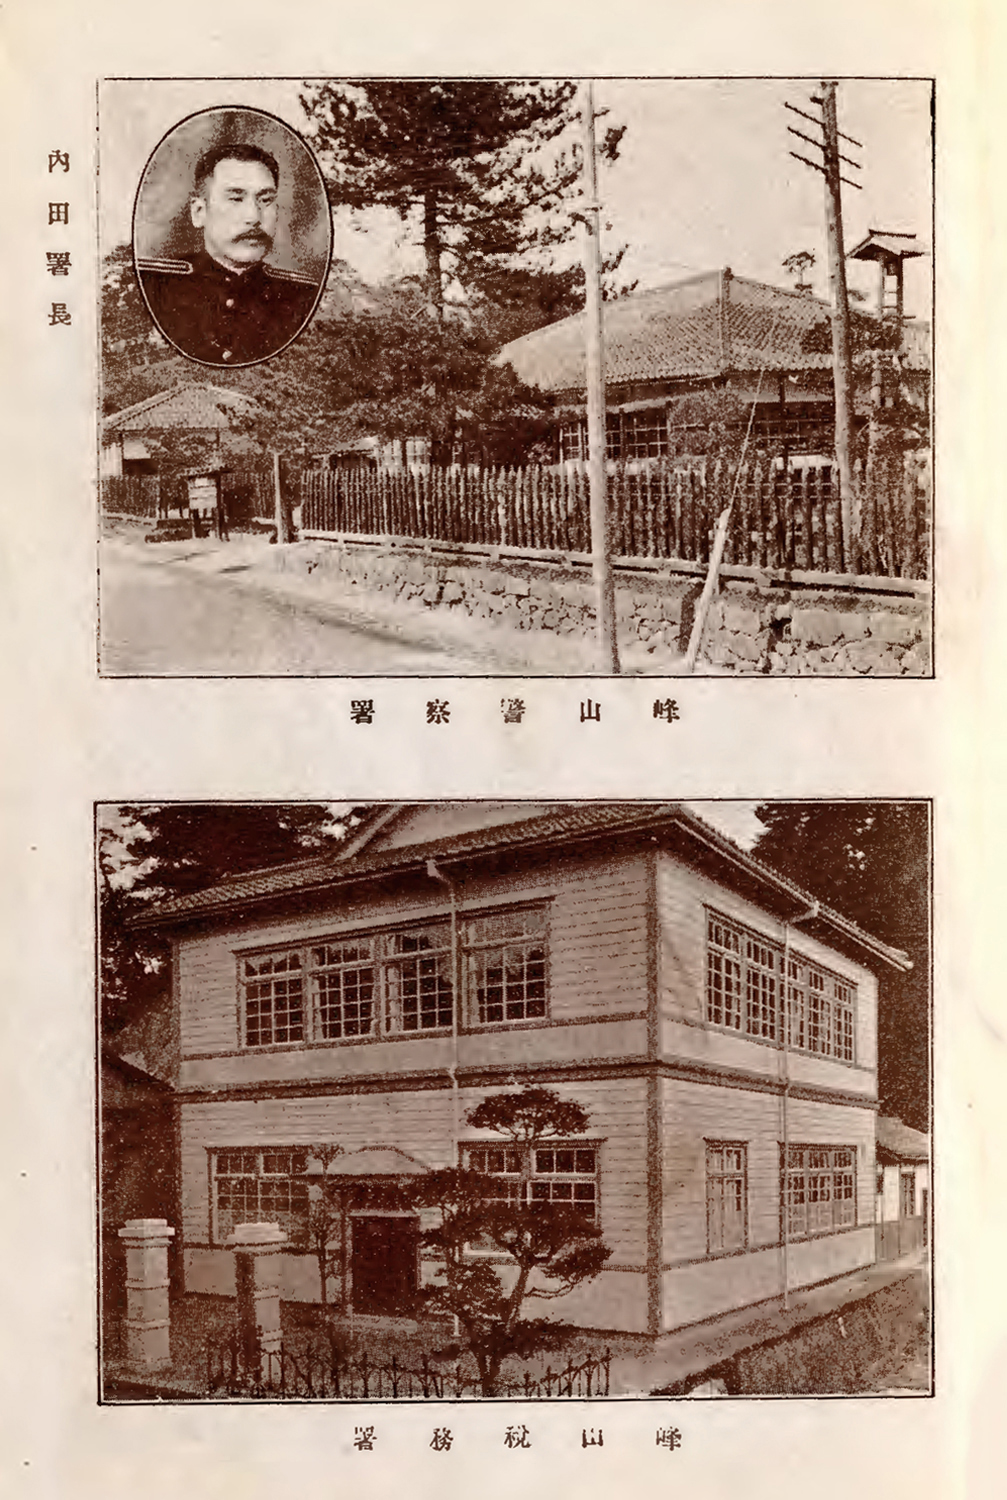 峰山警察署's image 1